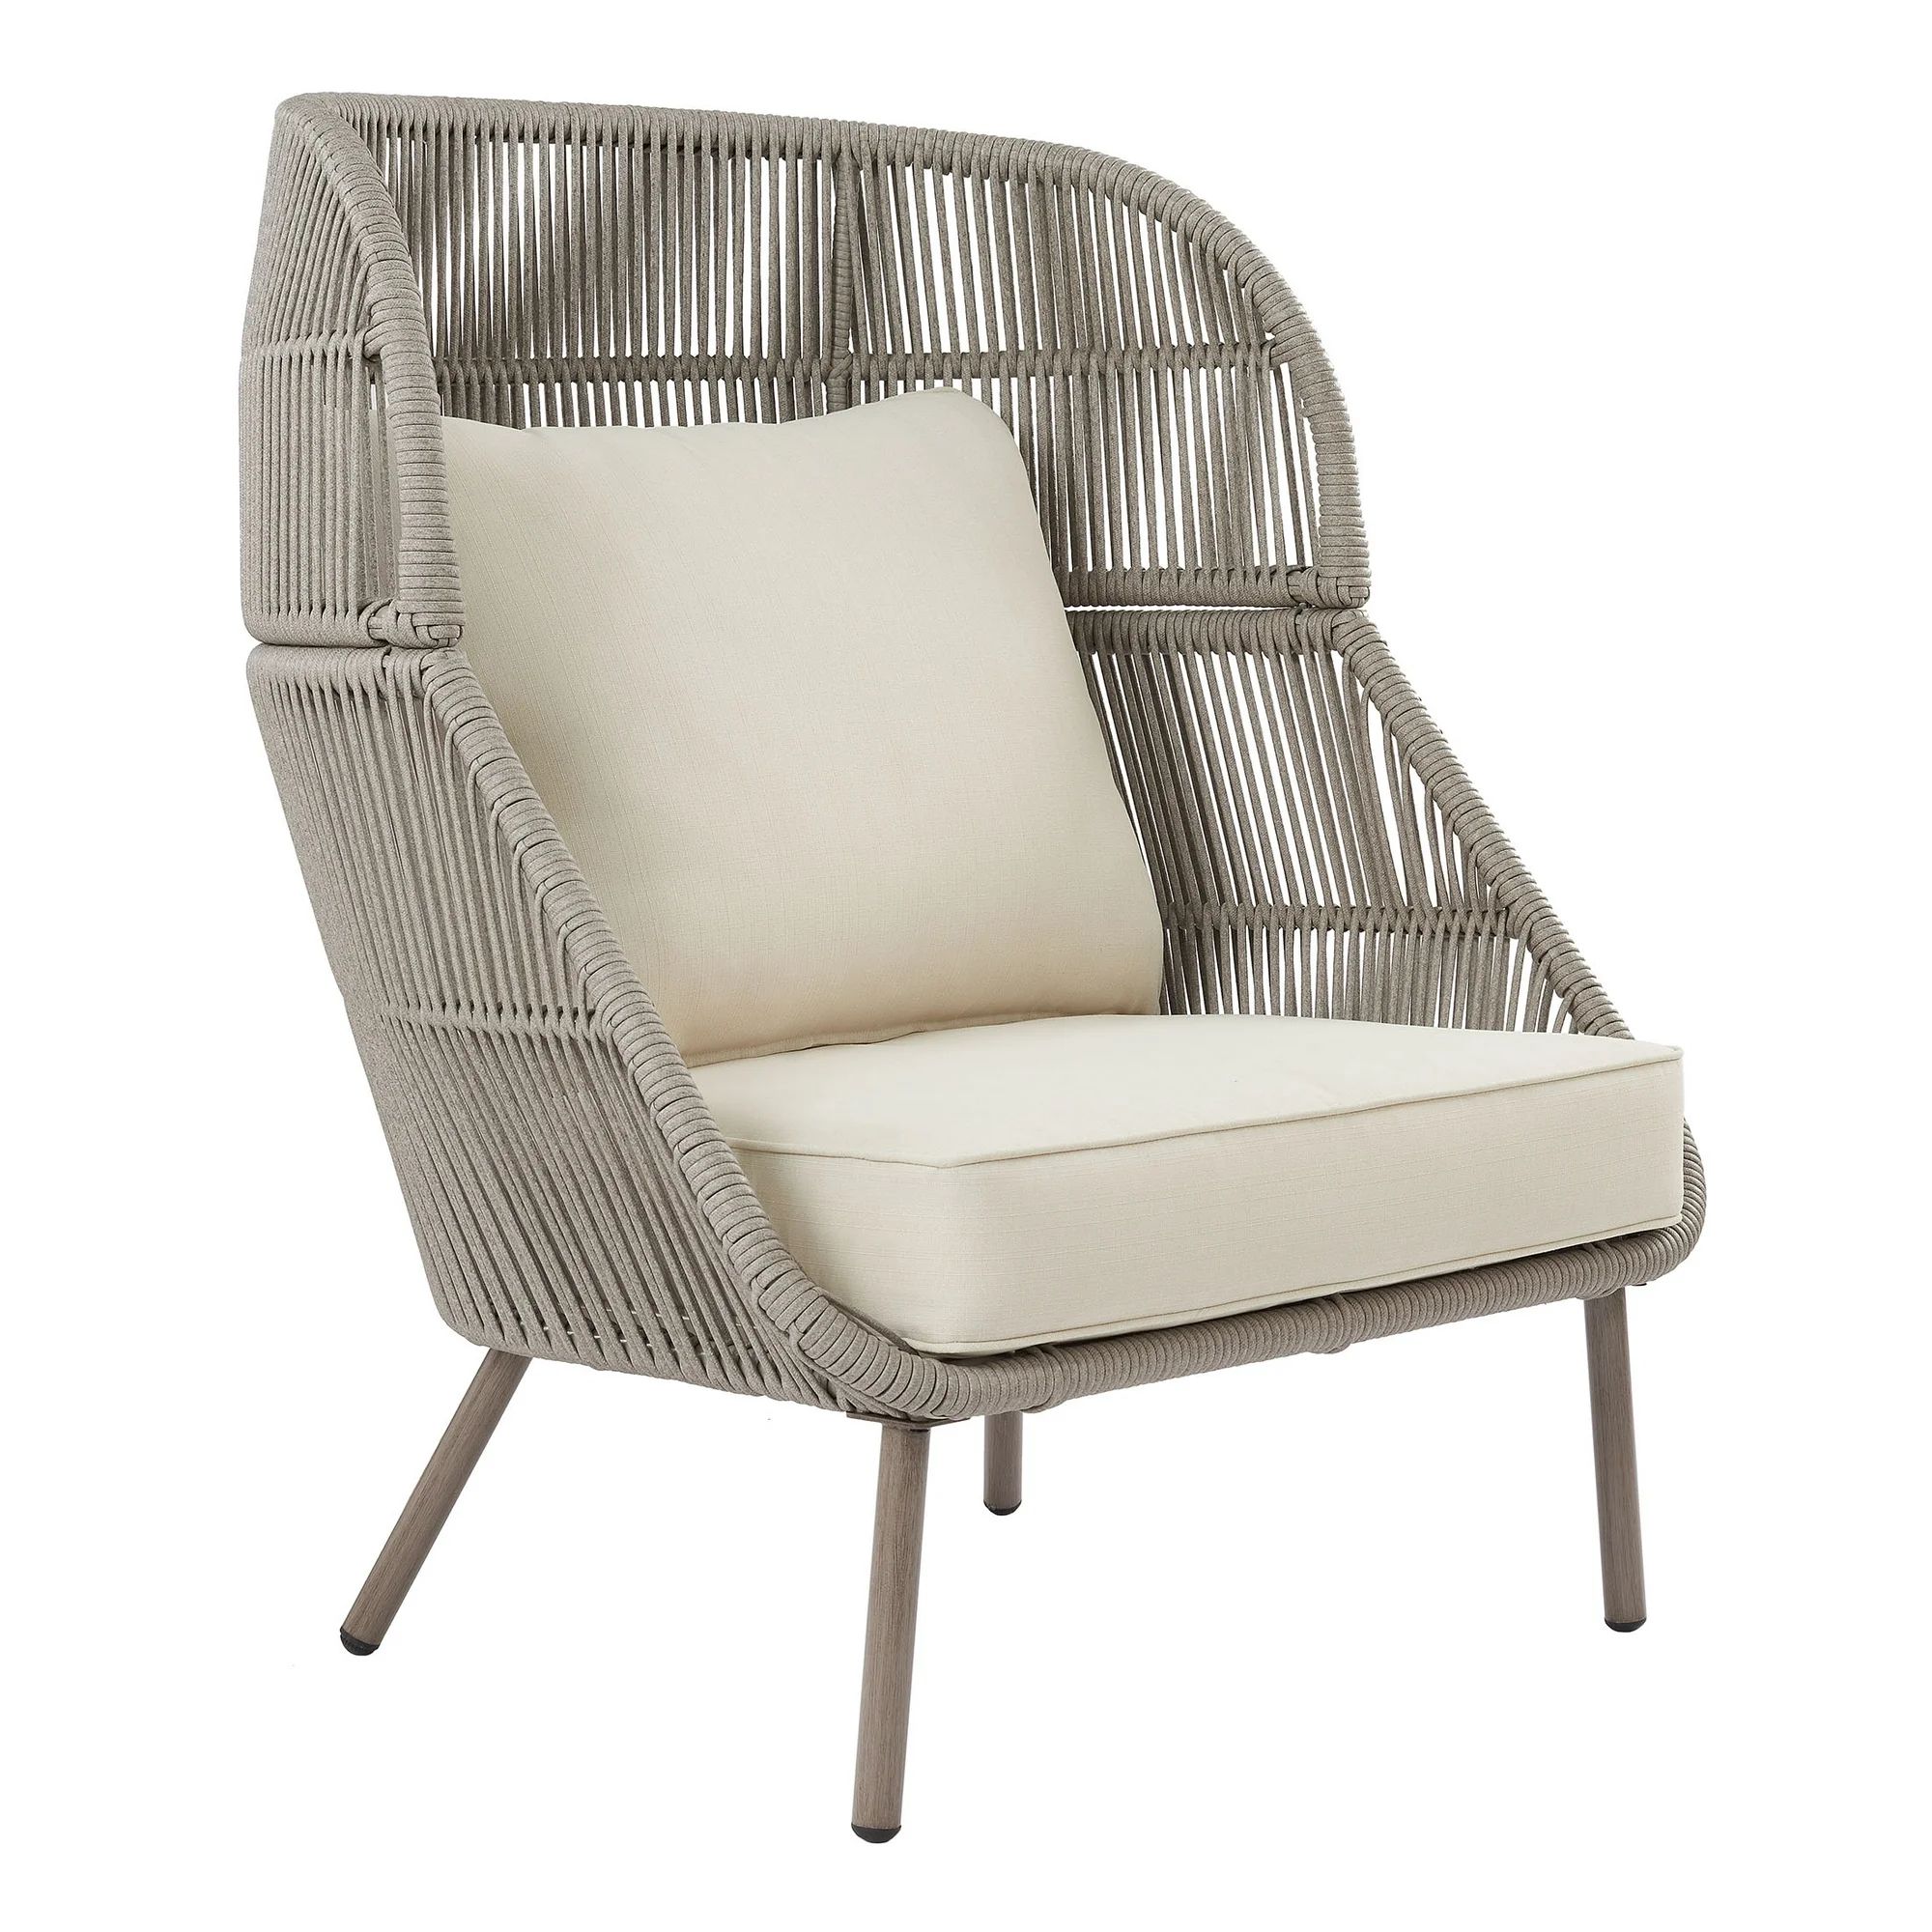 Better Homes & Gardens Tarren Wicker Outdoor Accent Chair with Cushions, Beige | Walmart (US)